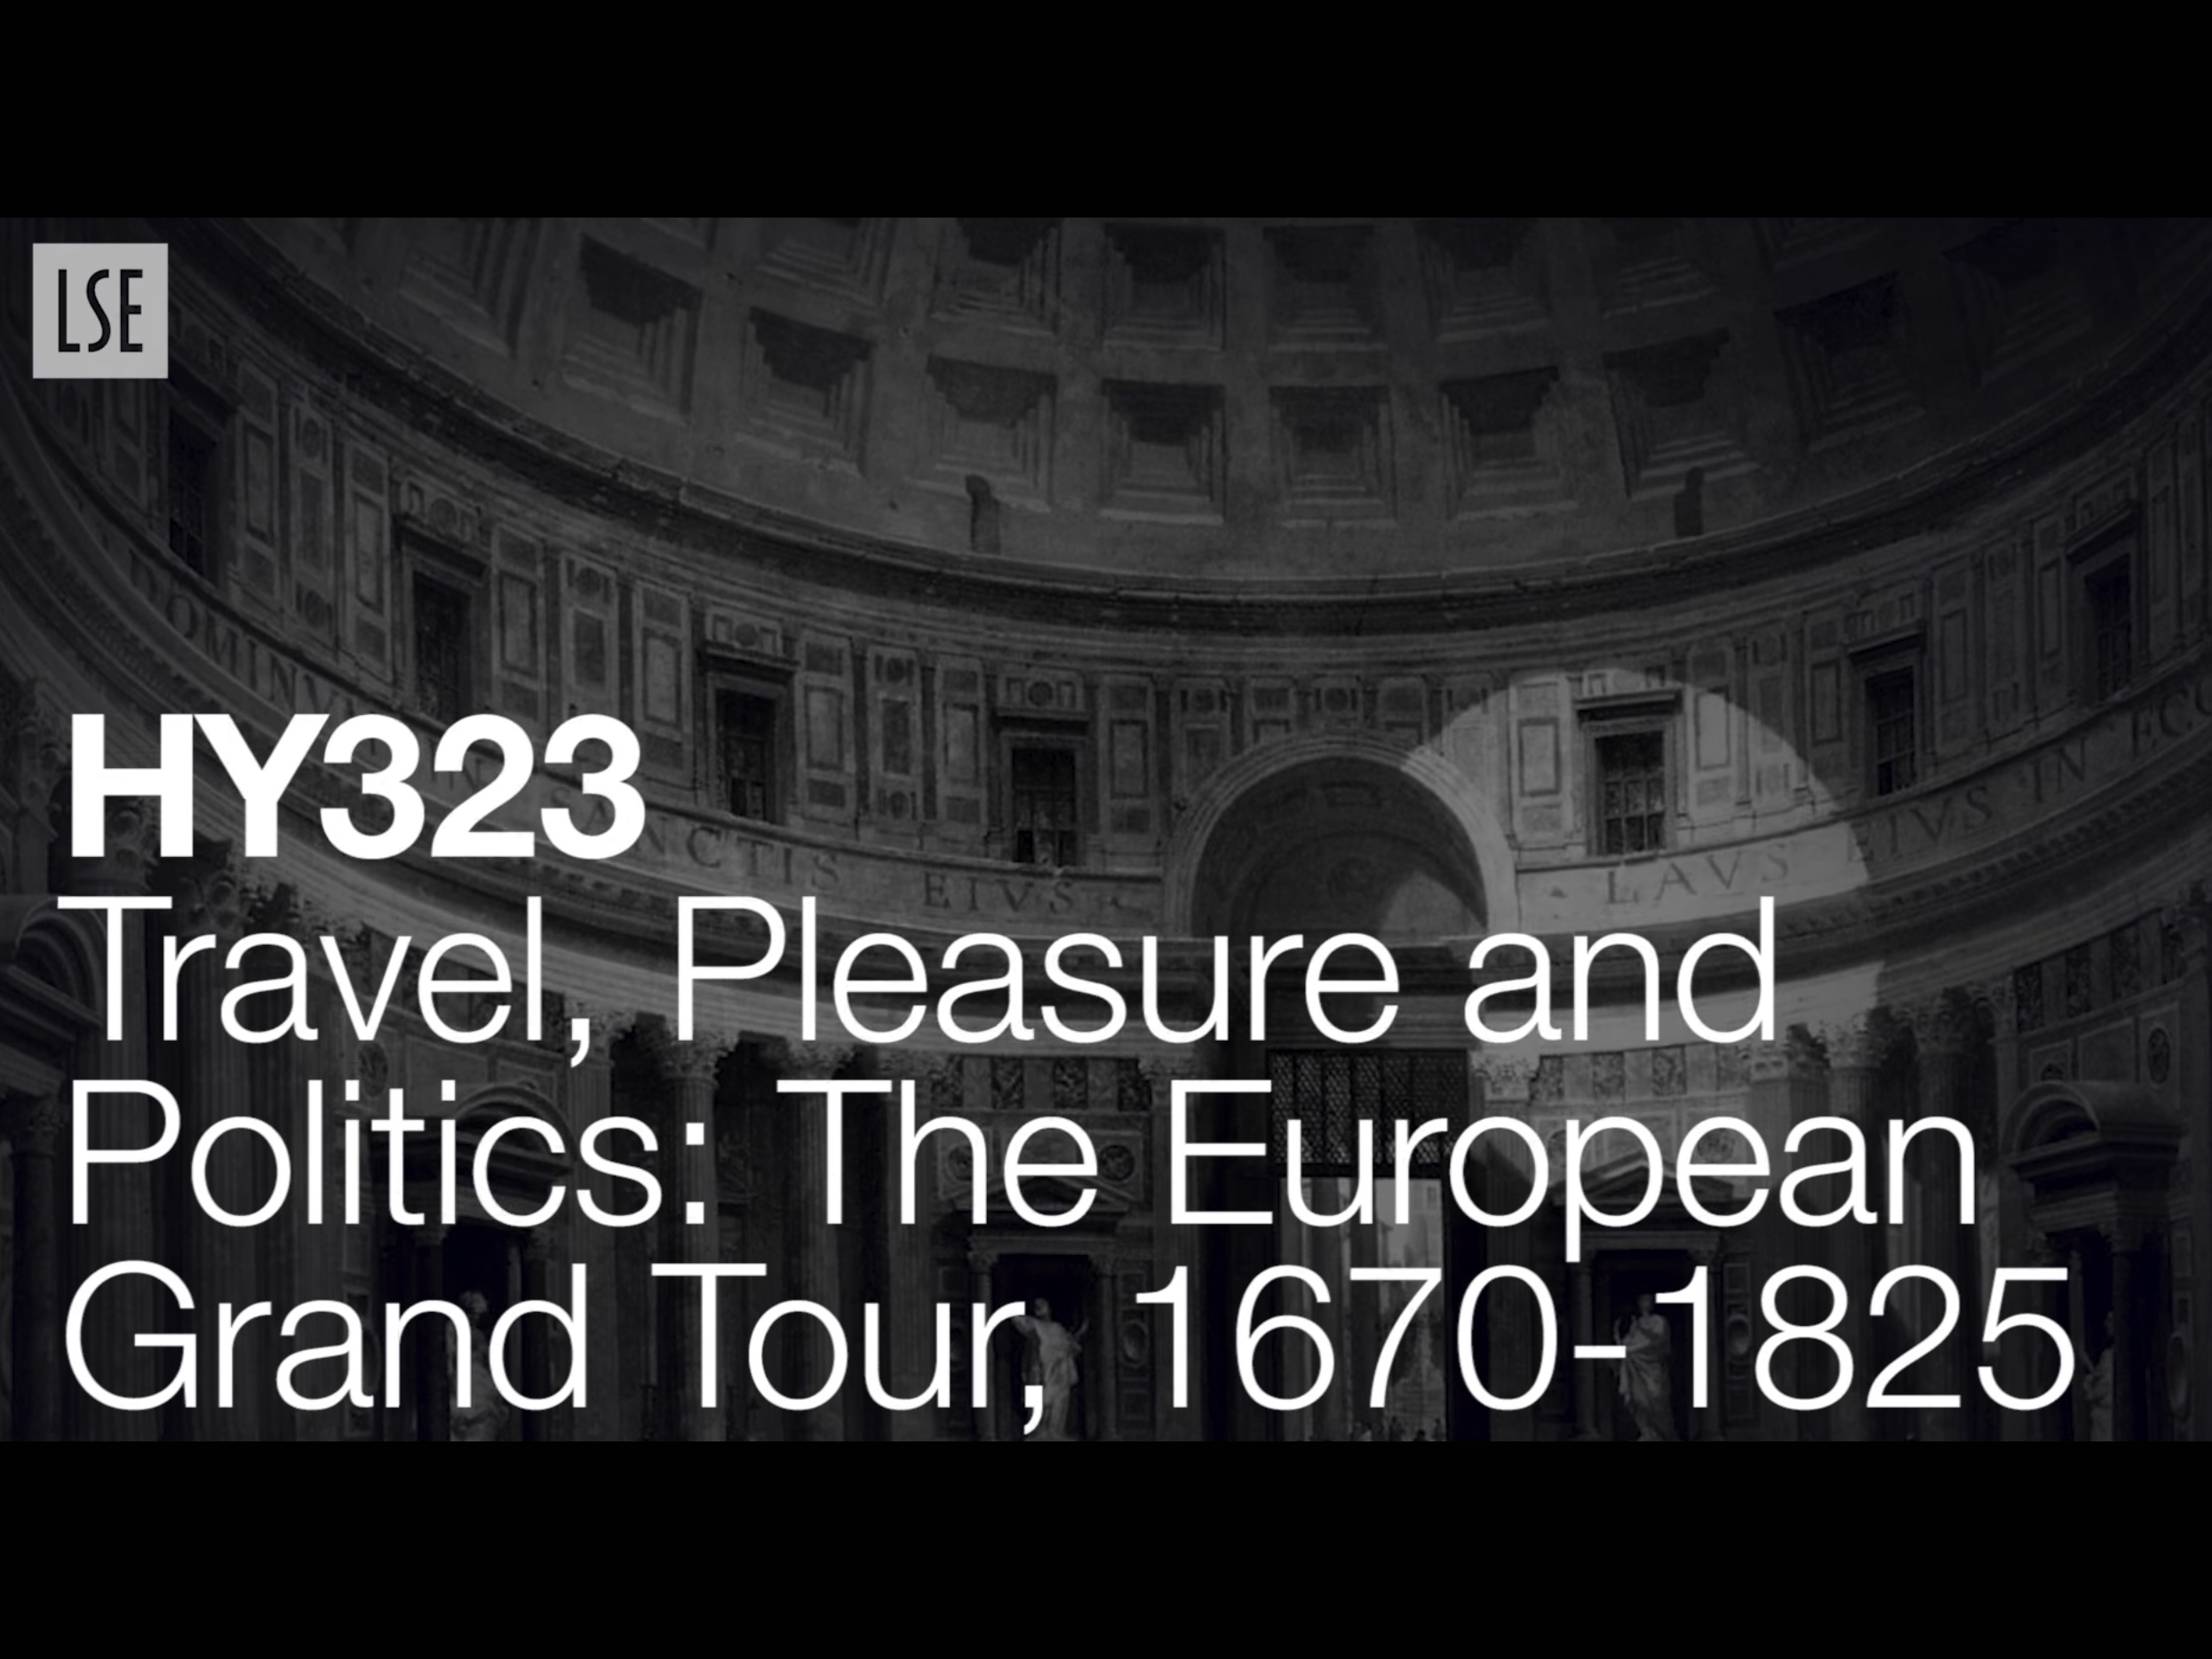 HY323: Travel, Pleasure and Politics: The European Grand Tour, 1670-1825